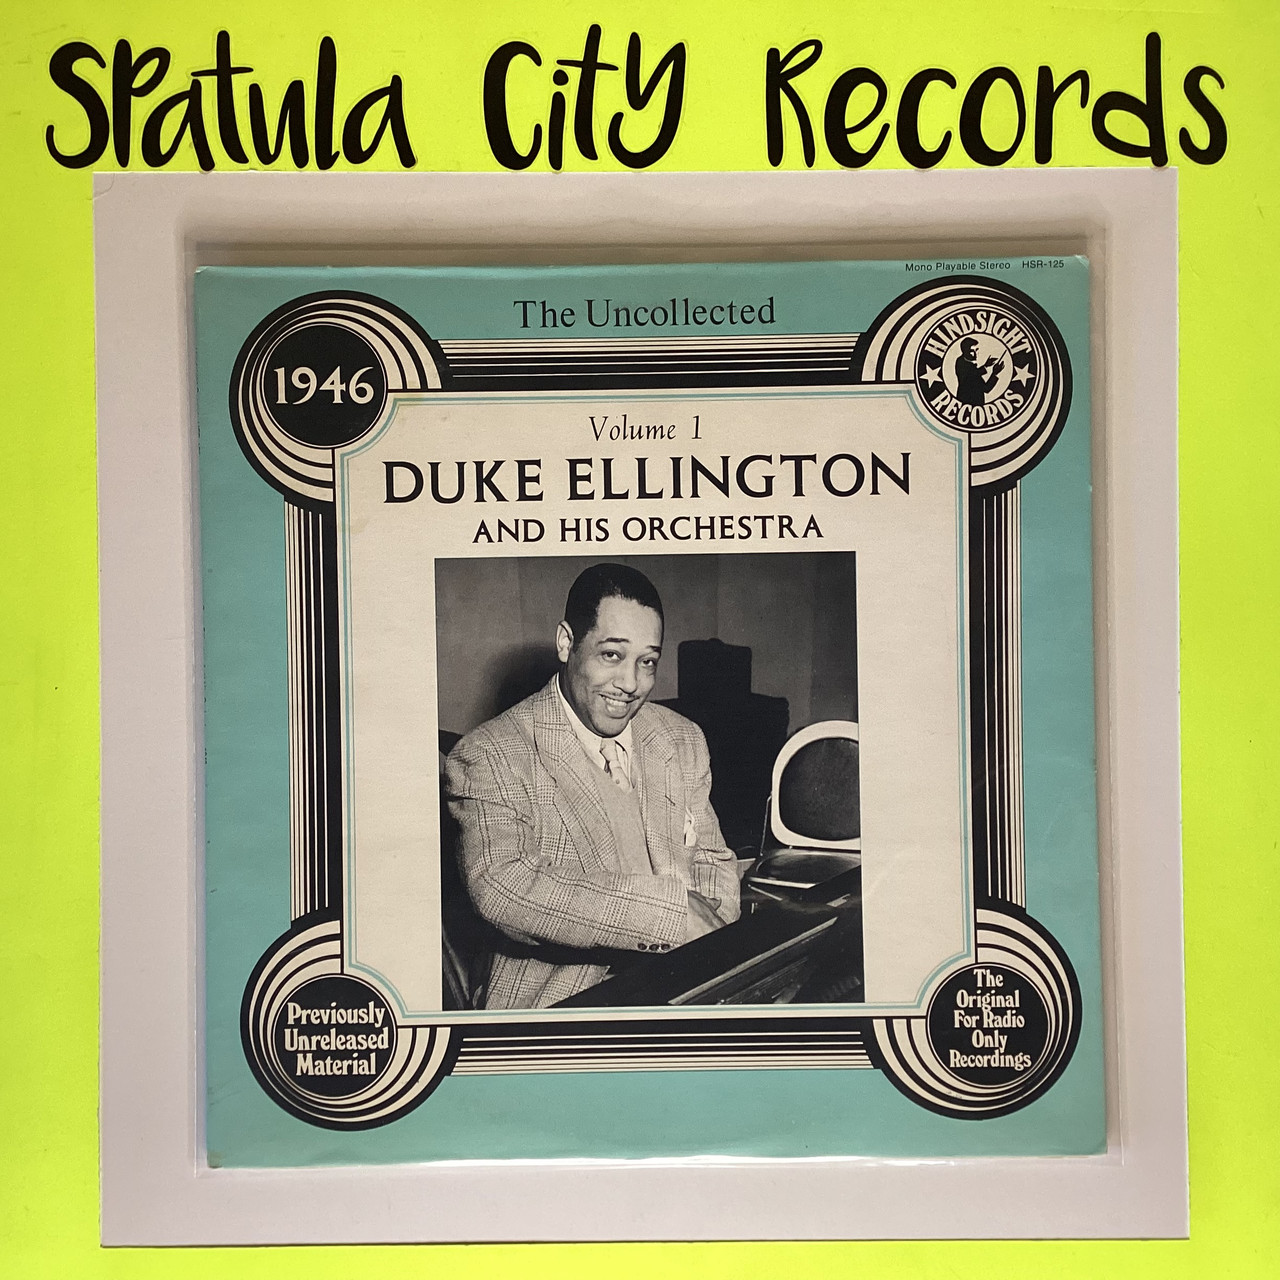 Duke Ellington - The Uncollected Volume 1, 1946 -  vinyl record album LP